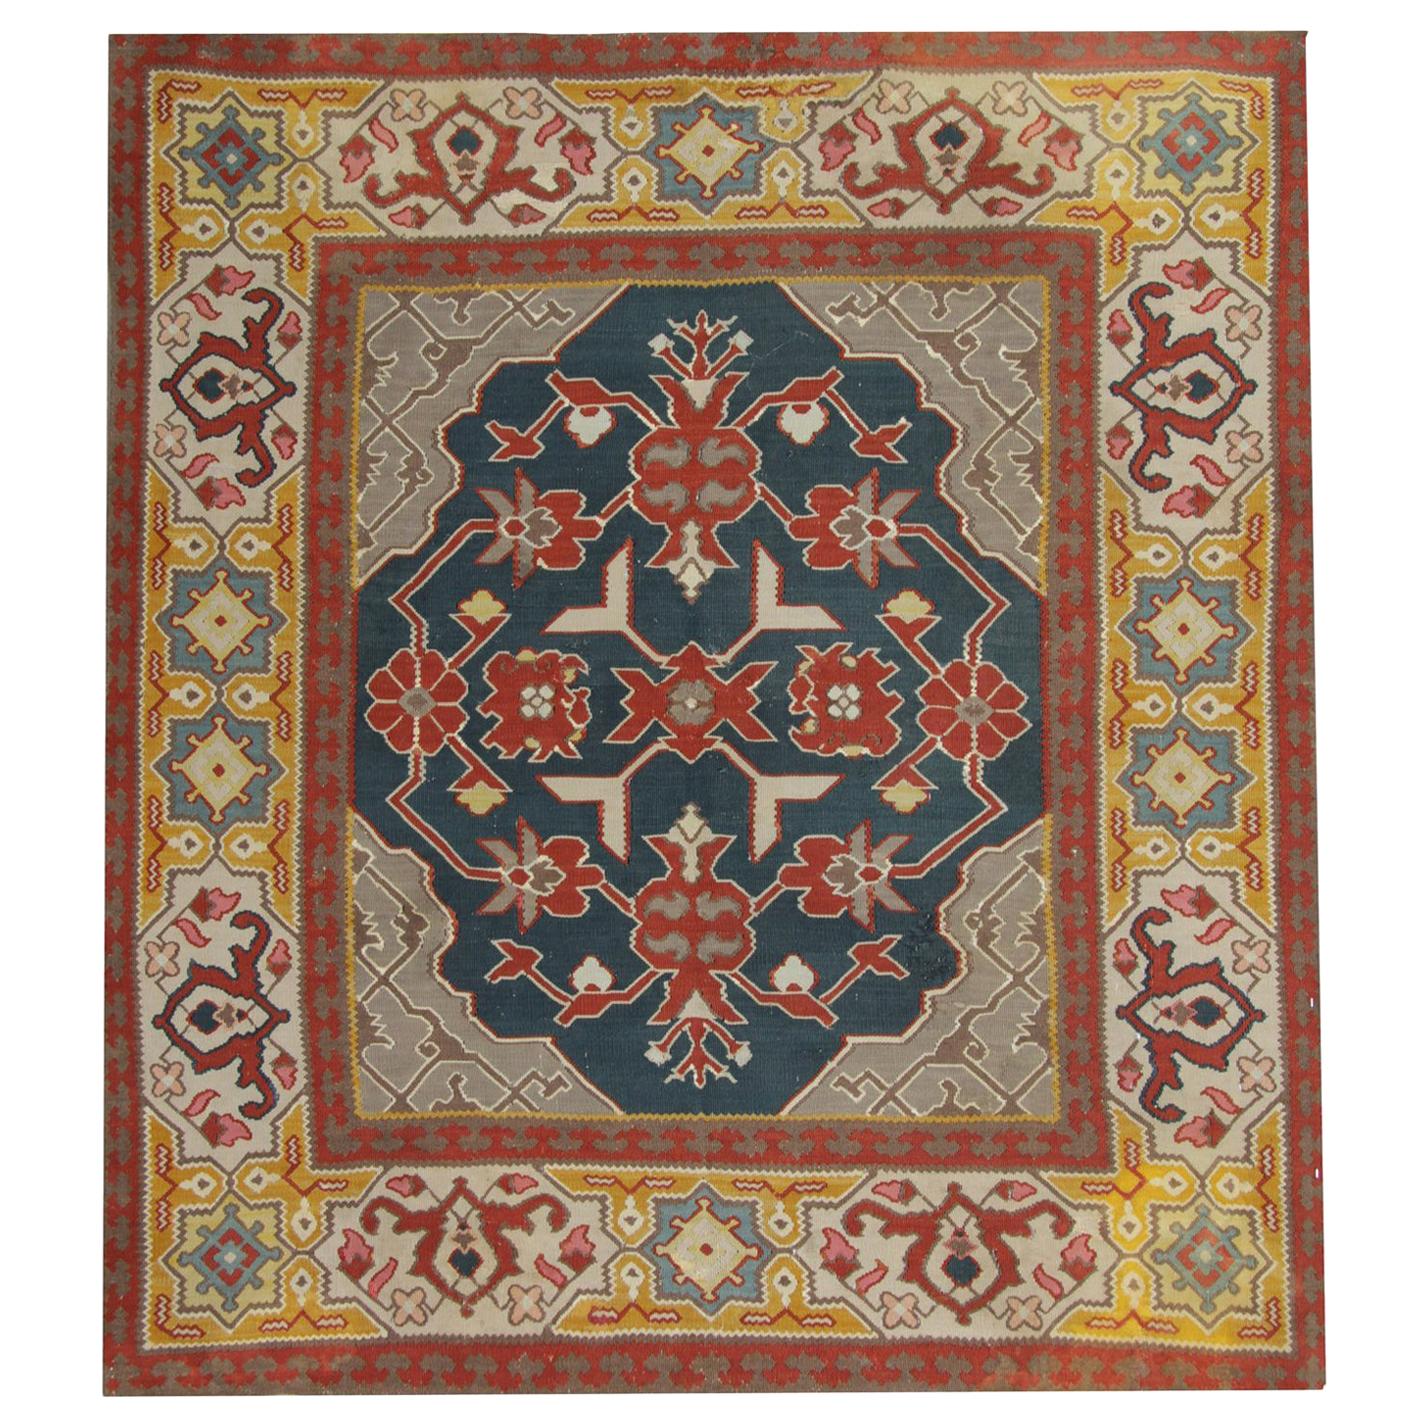 Square Rugs Handmade Carpet Antique Rugs, Kilim Rugs Luxury Rustic Oriental Rugs